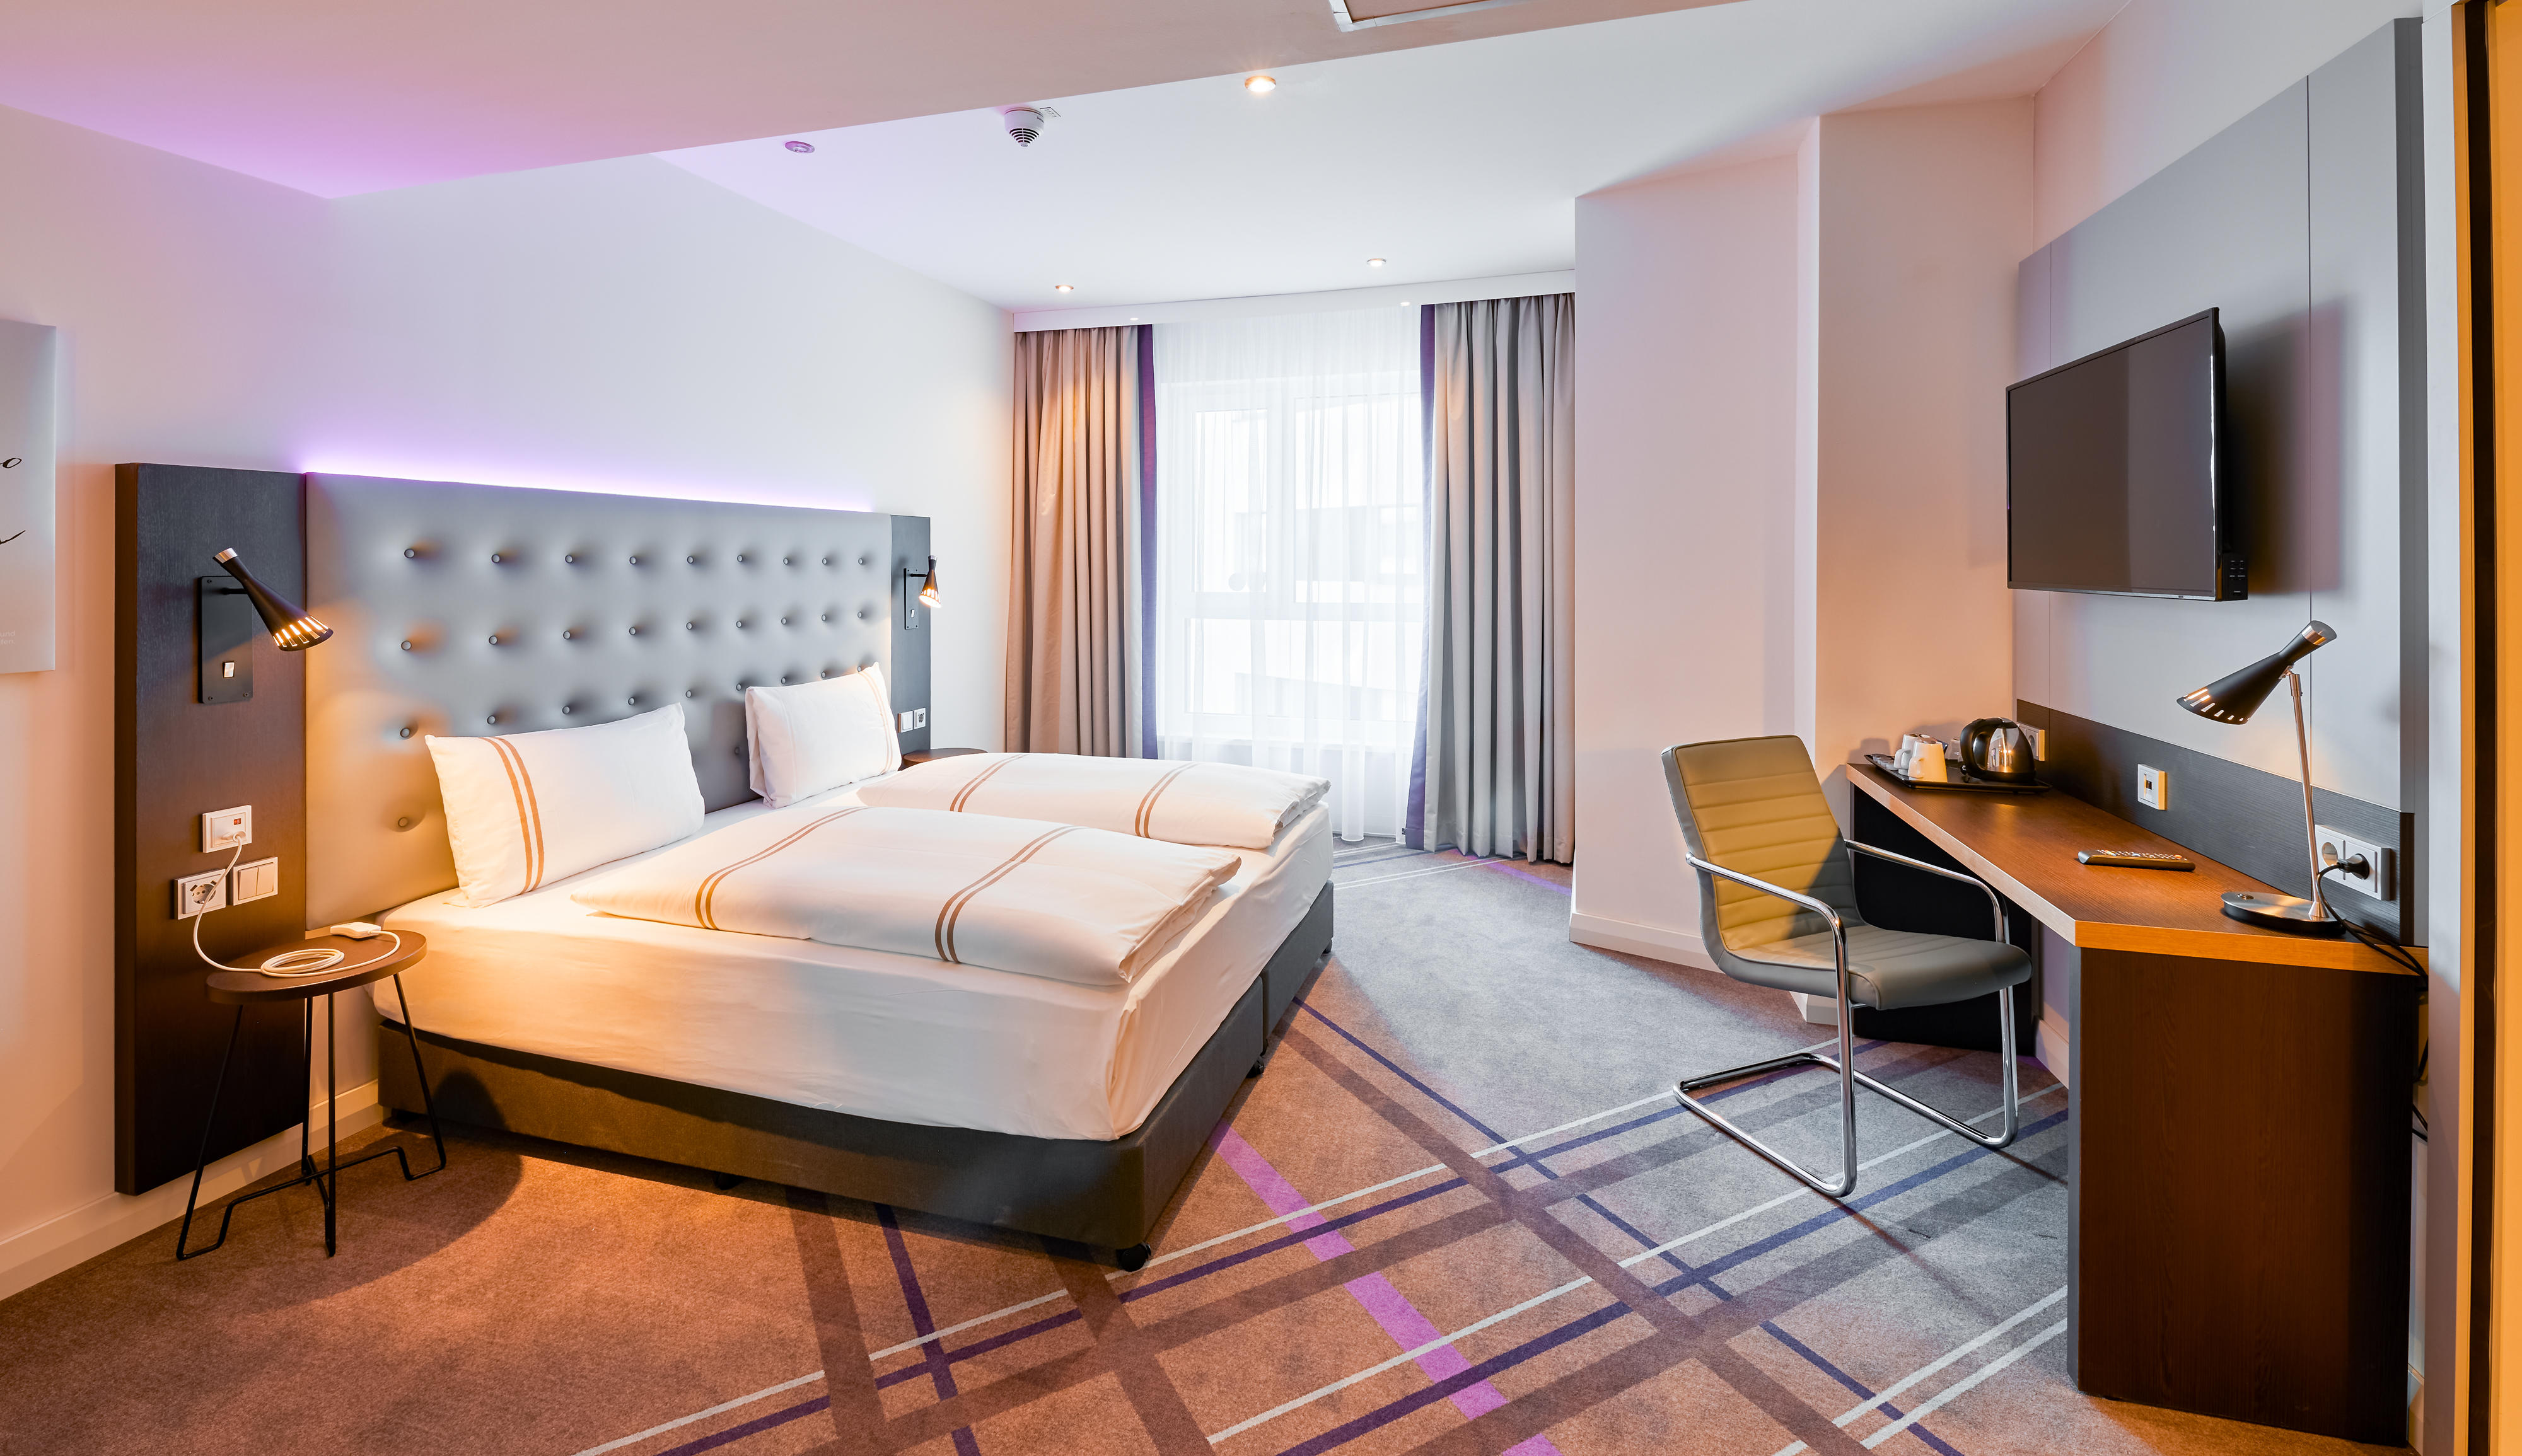 Premier Inn Saarbrucken City Congresshalle hotel accessible room with lowered bed